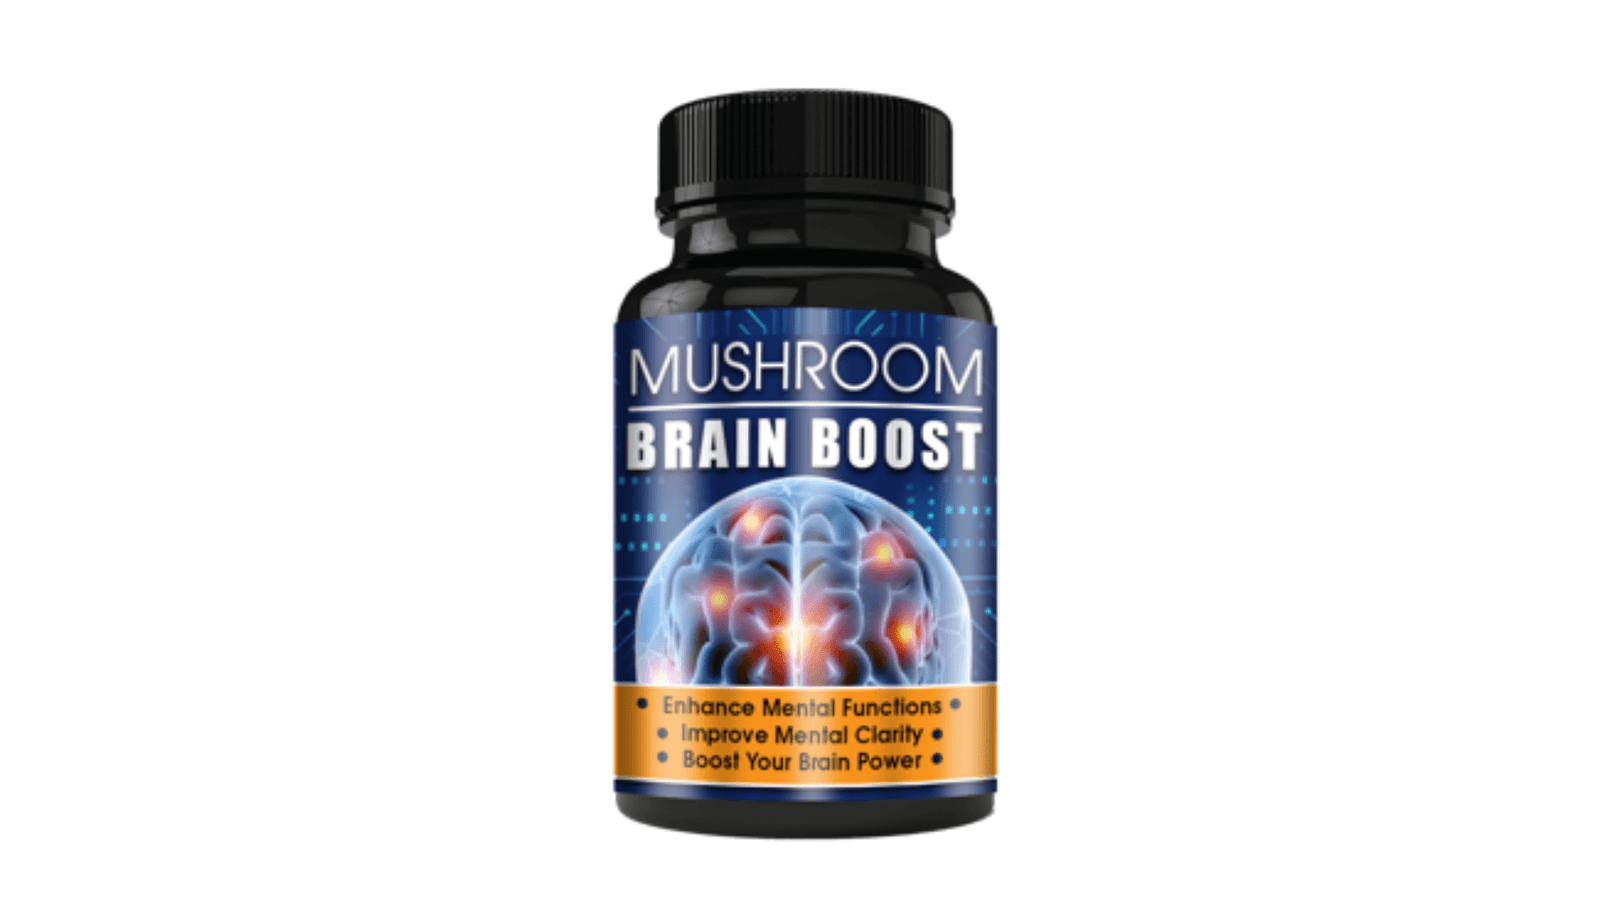 Mushroom Brain Boost Reviews